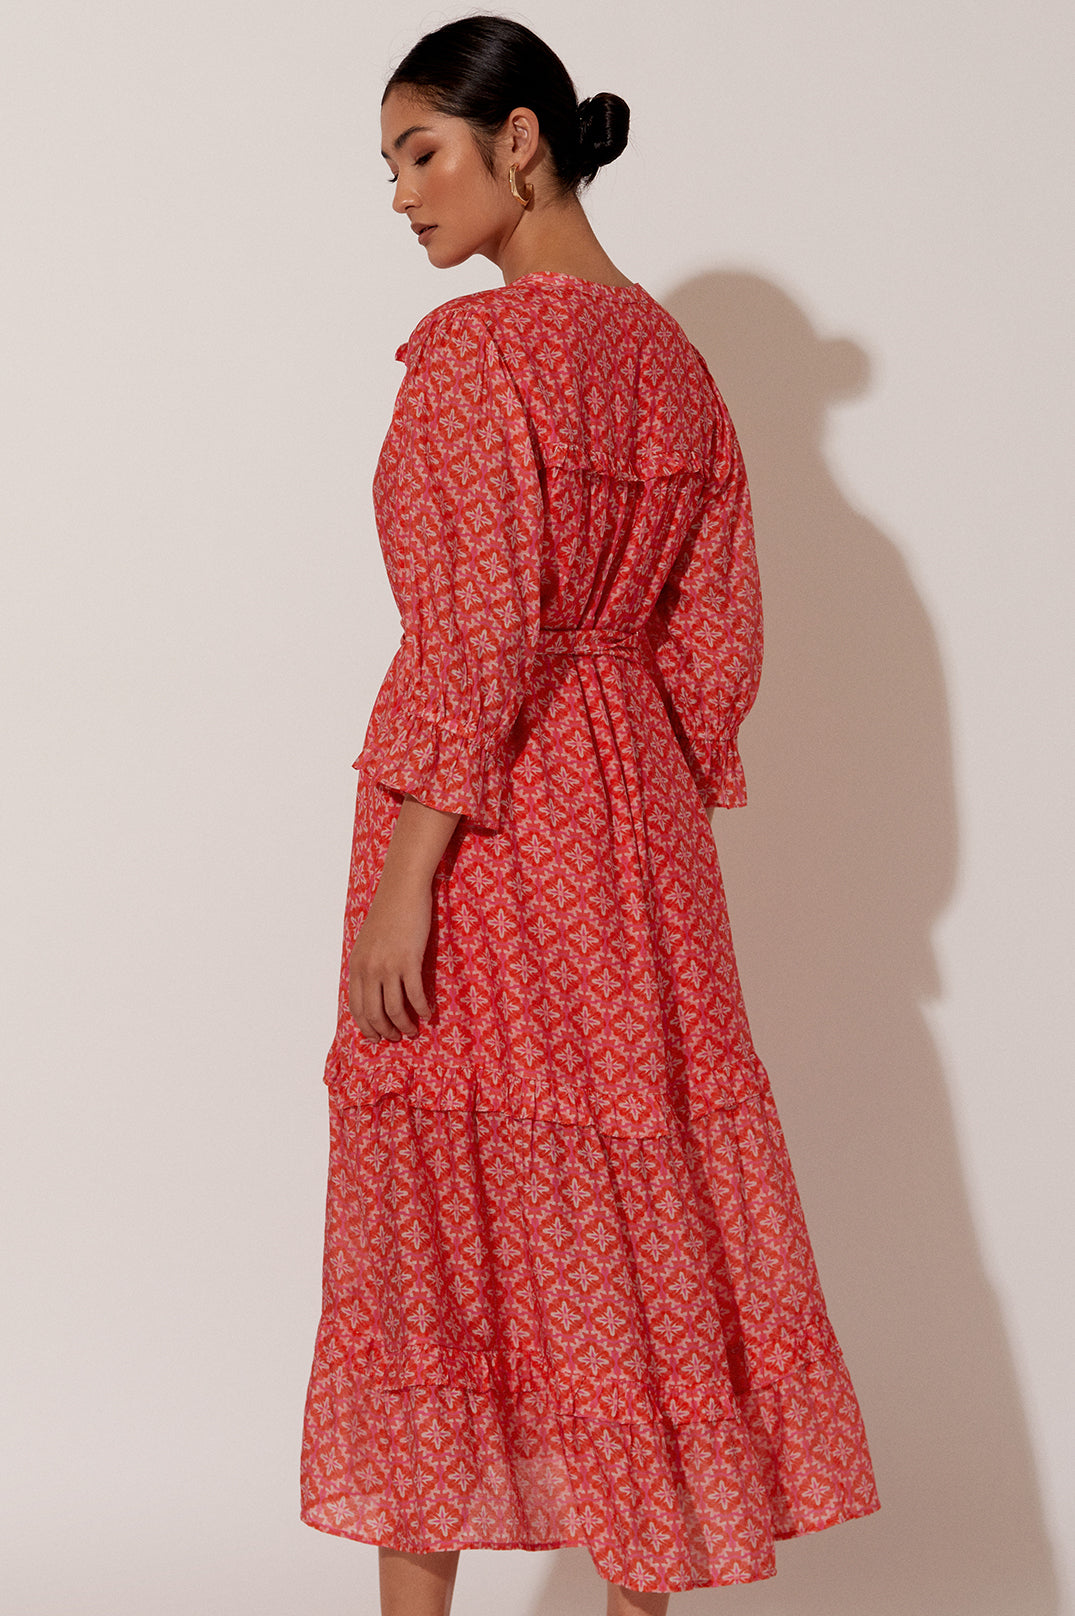 Frances print dress